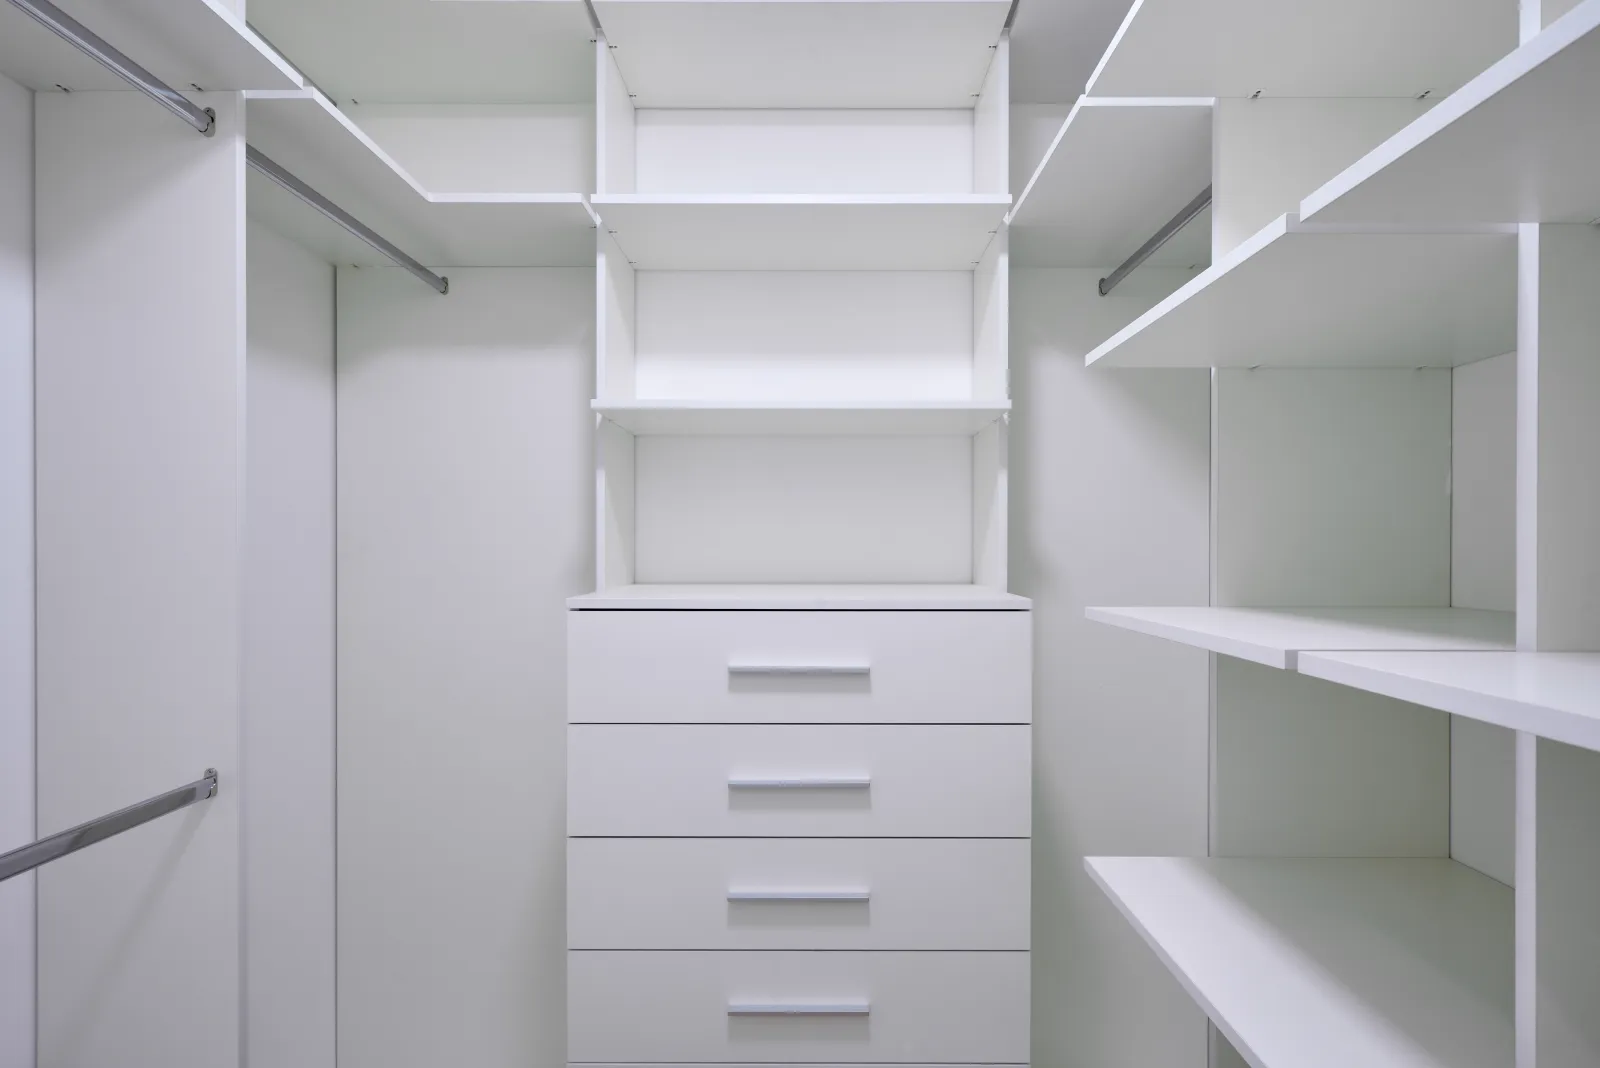 Should I Build My Own Closet Organizer?